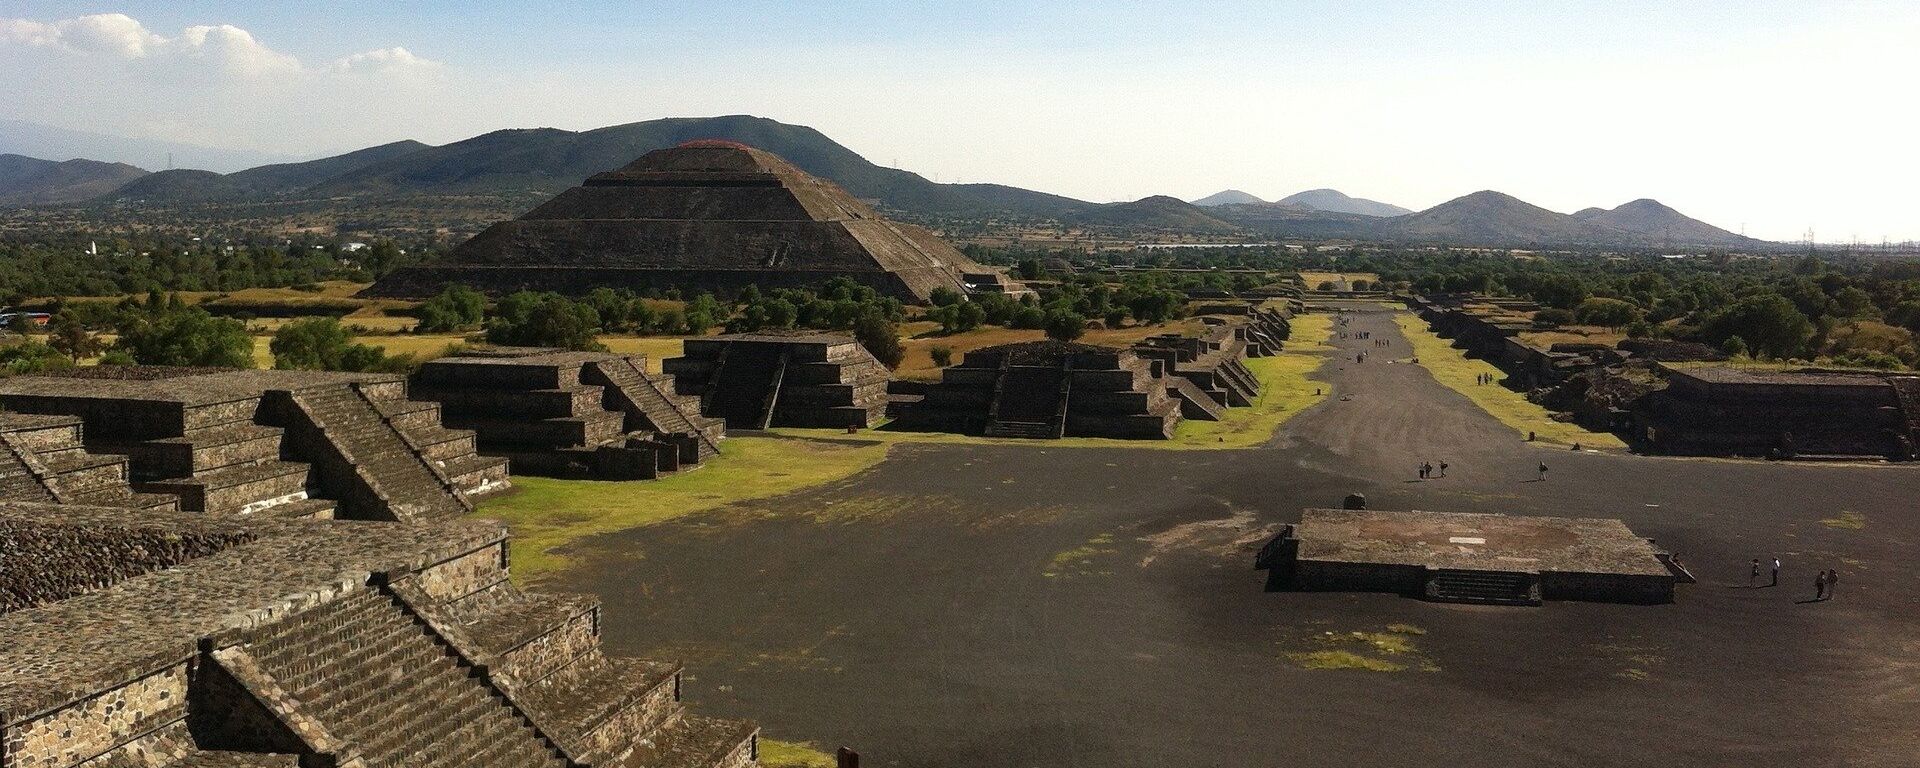 Teotihuacán - Sputnik Mundo, 1920, 23.09.2018